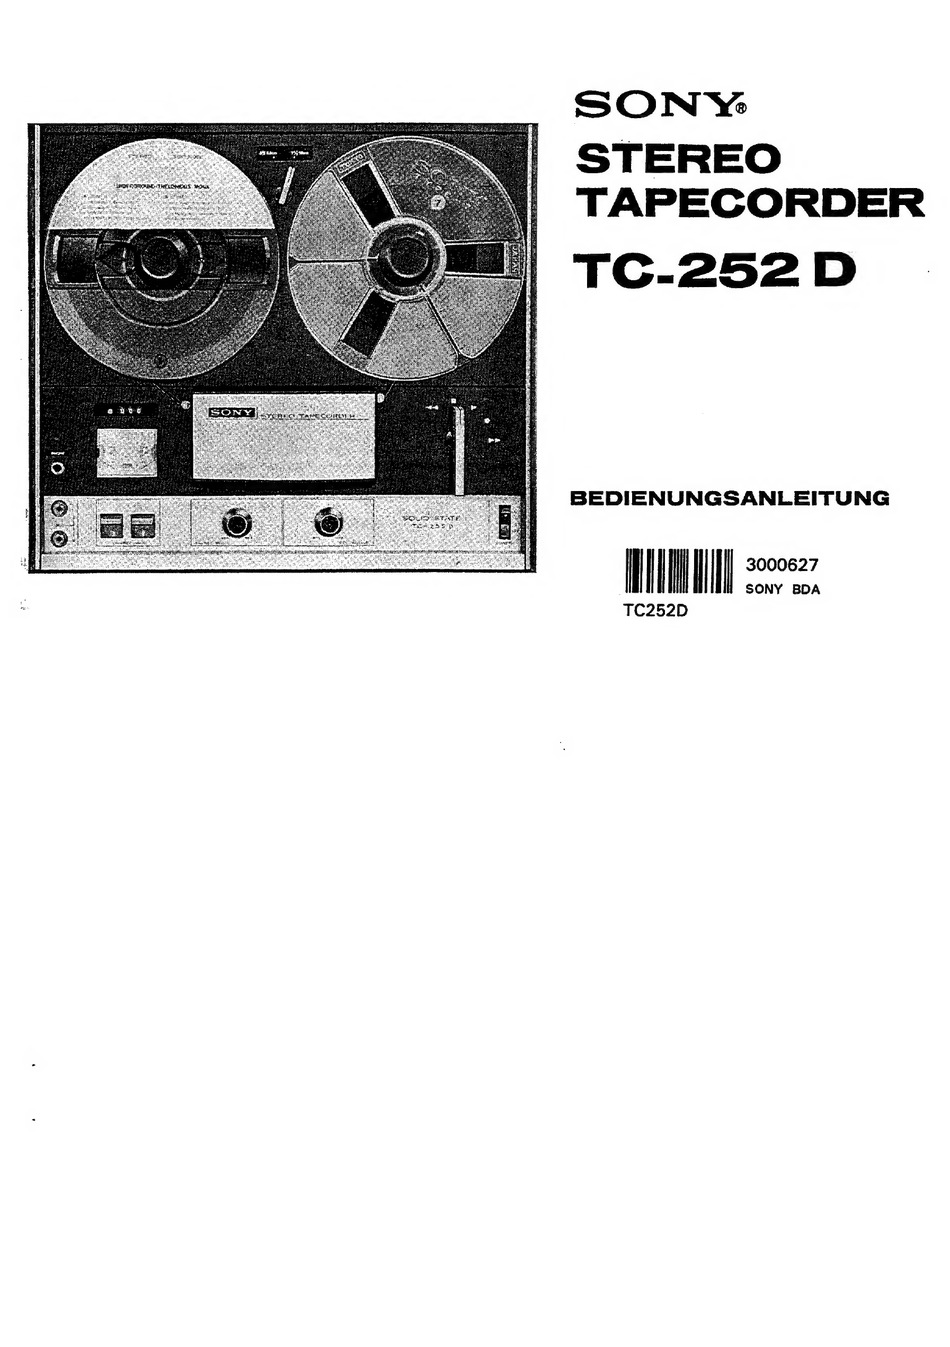 SONY TC-252 D MANUAL Pdf Download